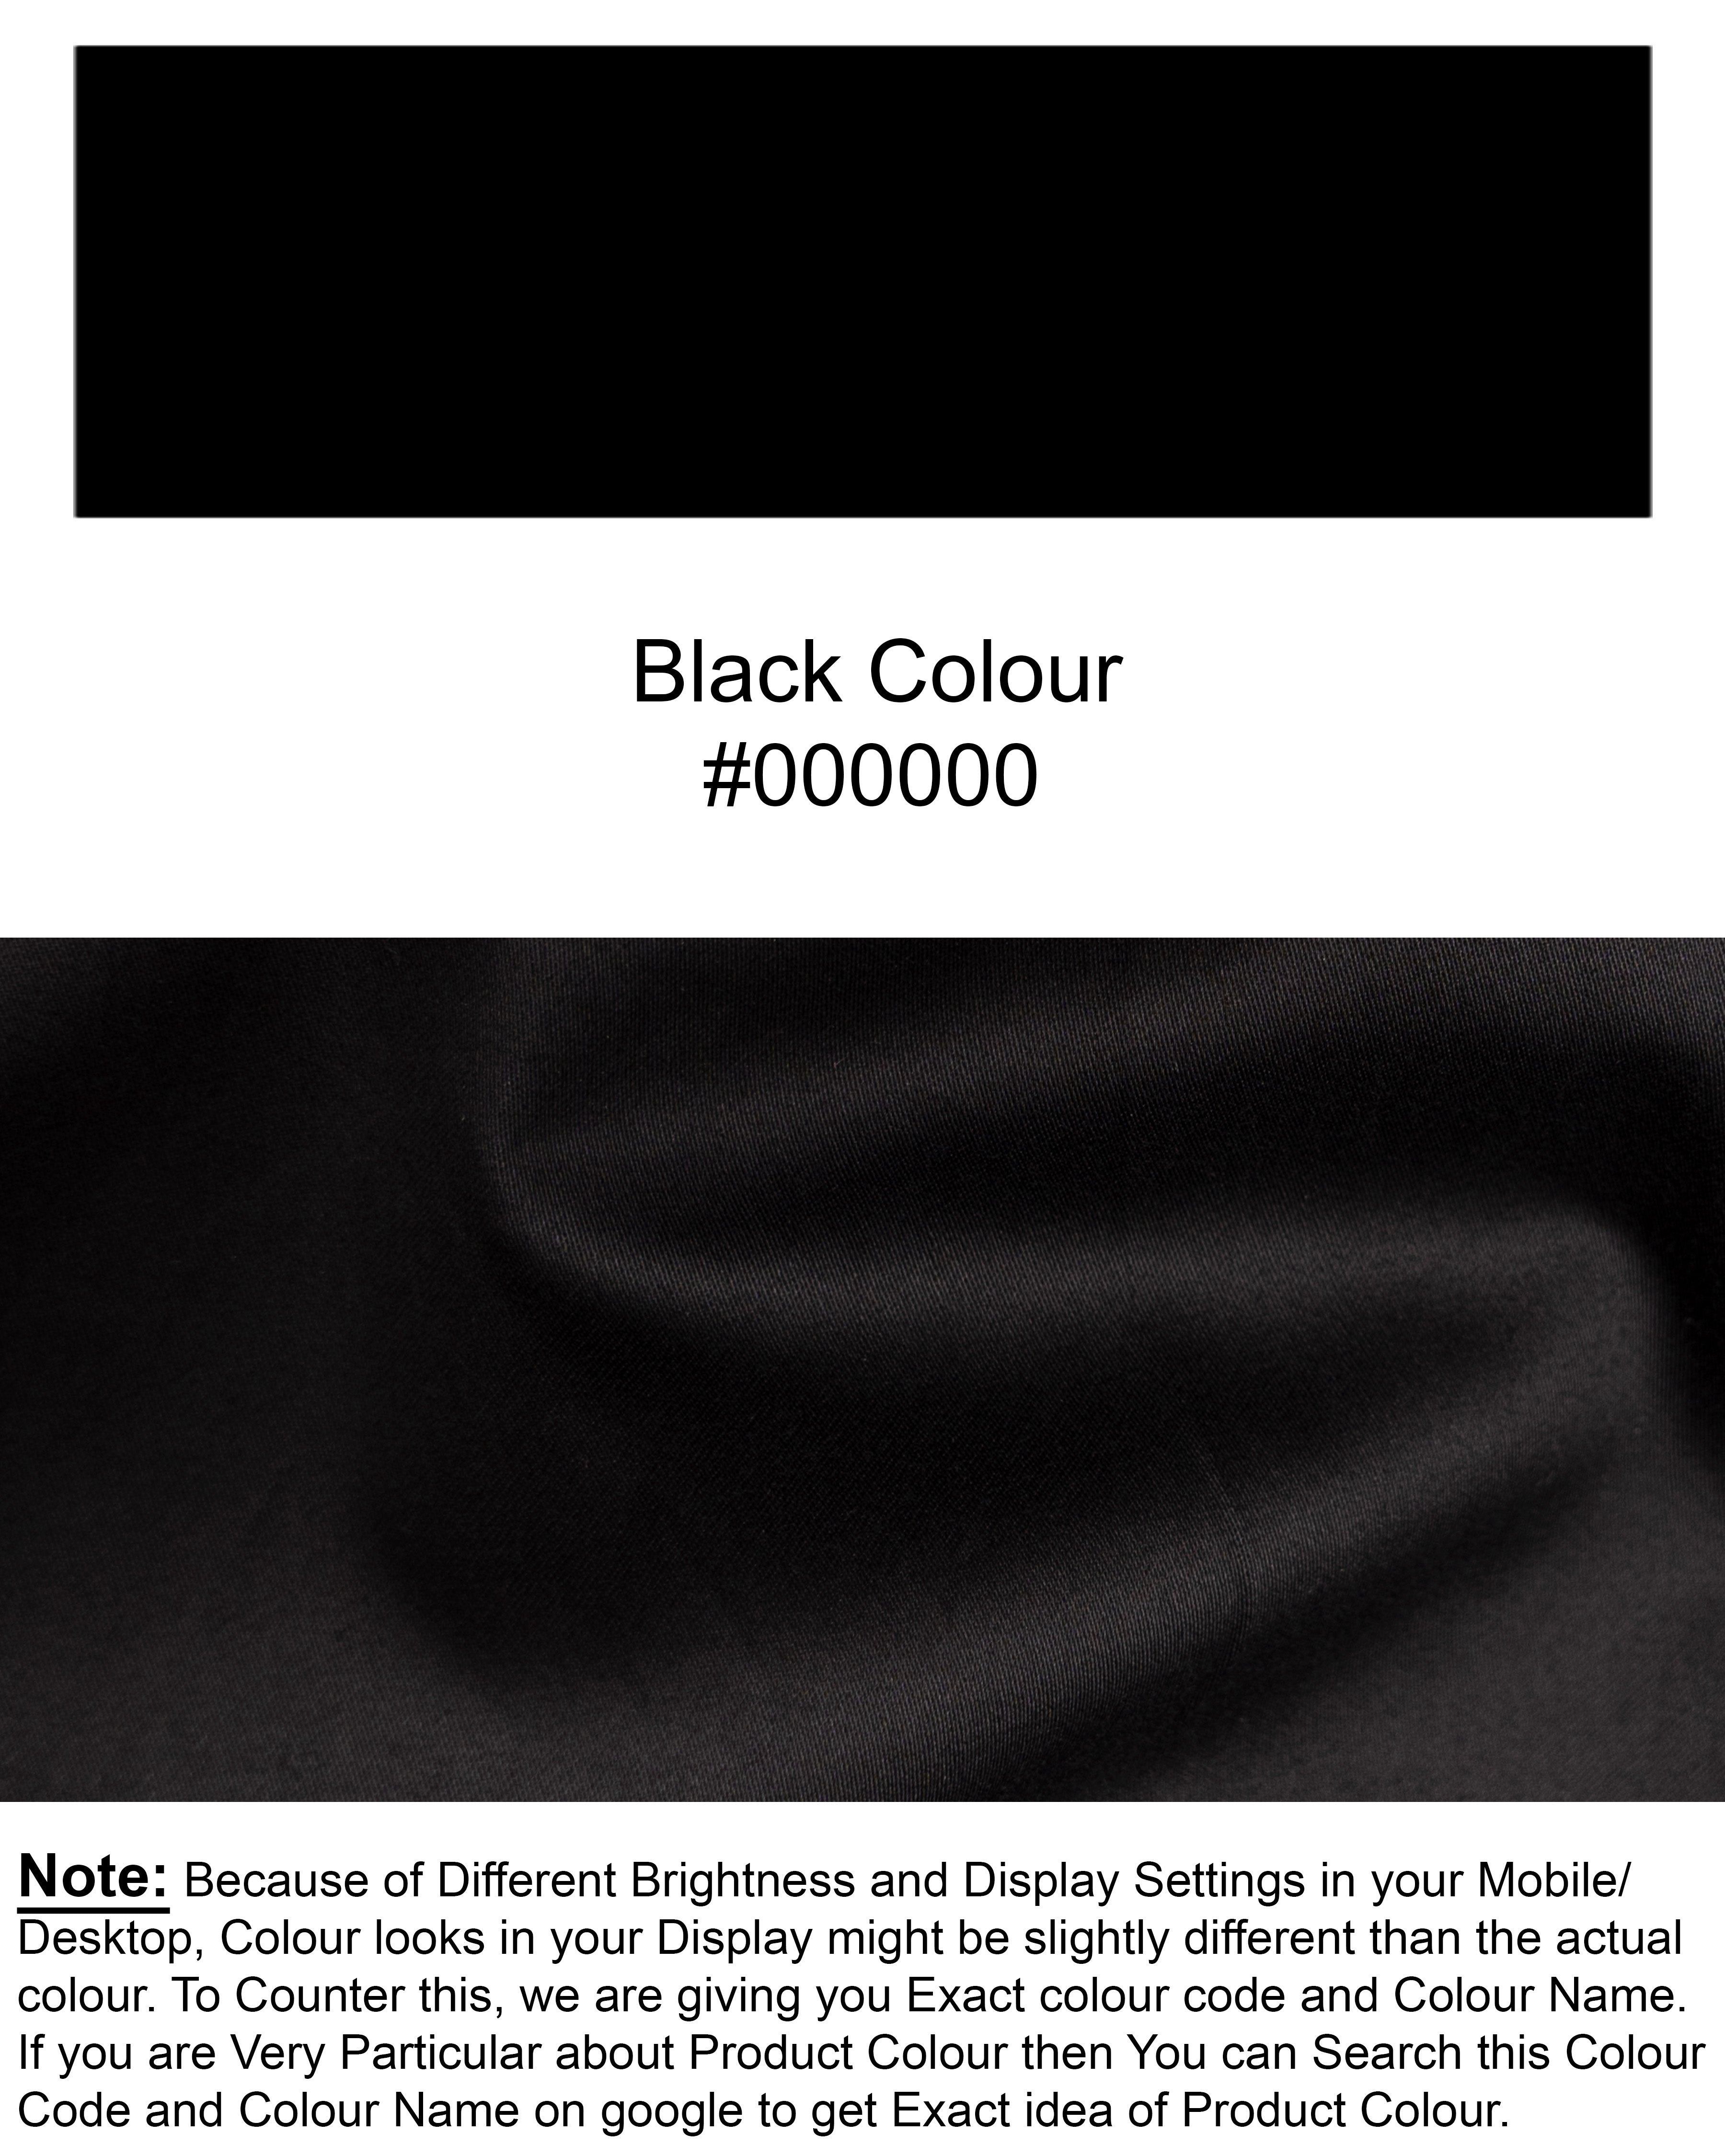 Jade Black Premium Satin Zipper Shirt with Hoodie 4962-CHD-BLK-P55-38, 4962-CHD-BLK-P55-H-38, 4962-CHD-BLK-P55-39, 4962-CHD-BLK-P55-H-39, 4962-CHD-BLK-P55-40, 4962-CHD-BLK-P55-H-40, 4962-CHD-BLK-P55-42, 4962-CHD-BLK-P55-H-42, 4962-CHD-BLK-P55-44, 4962-CHD-BLK-P55-H-44, 4962-CHD-BLK-P55-46, 4962-CHD-BLK-P55-H-46, 4962-CHD-BLK-P55-48, 4962-CHD-BLK-P55-H-48, 4962-CHD-BLK-P55-50, 4962-CHD-BLK-P55-H-50, 4962-CHD-BLK-P55-52, 4962-CHD-BLK-P55-H-52